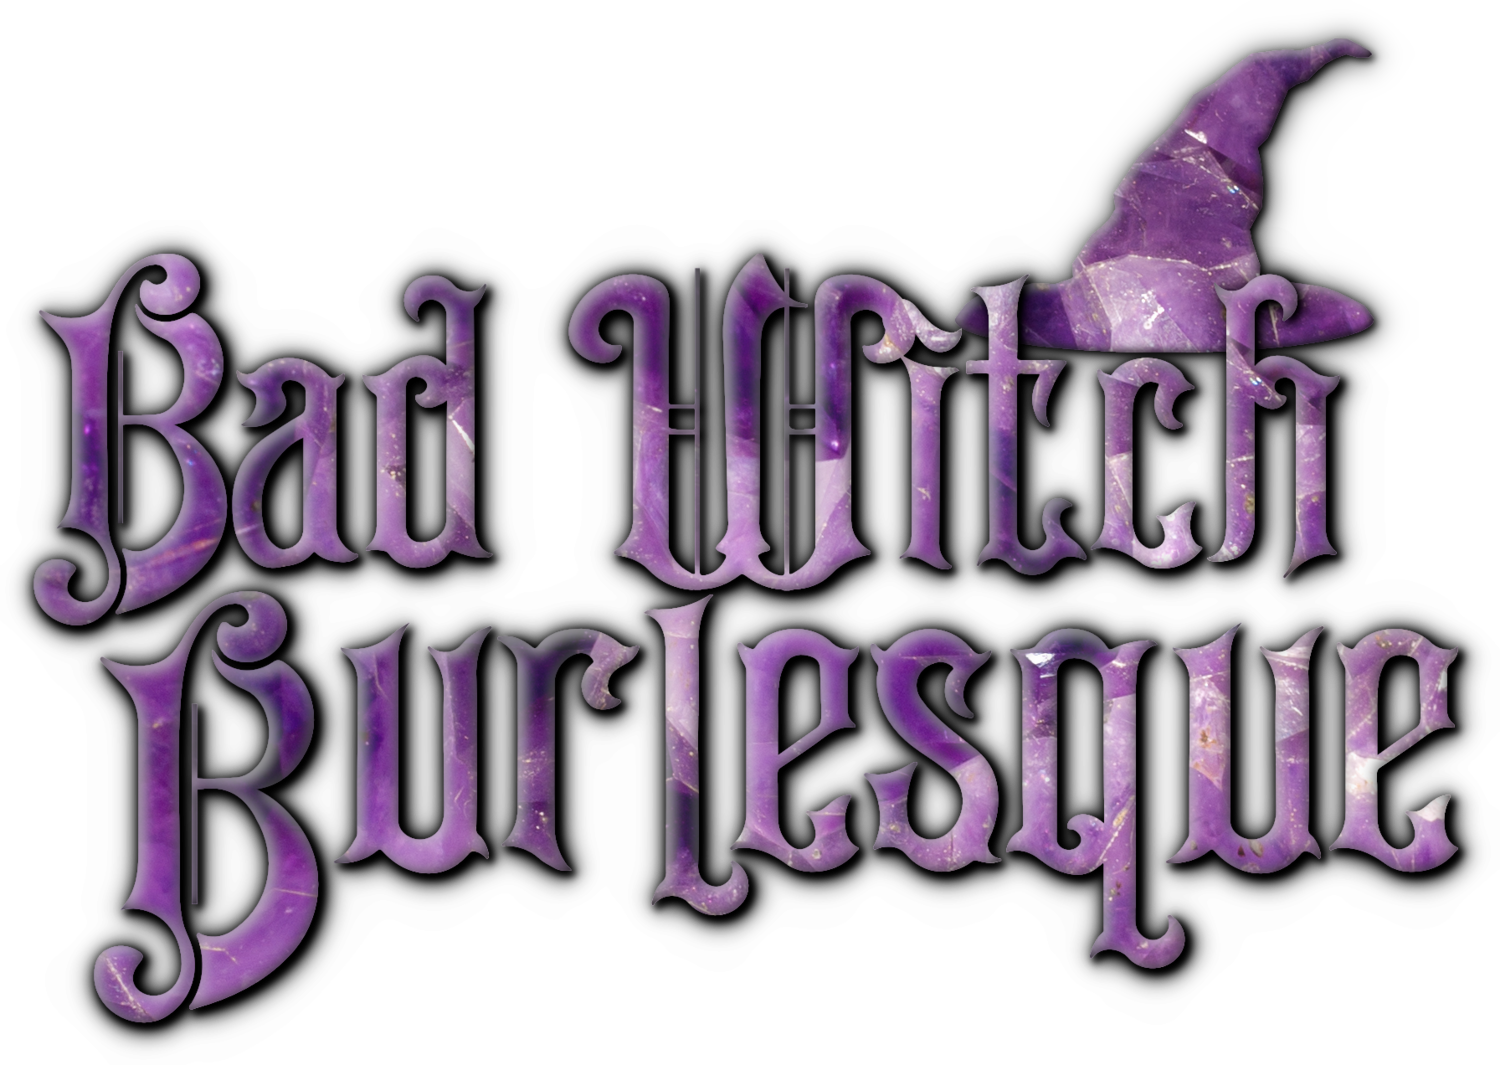 Bad Witch Burlesque